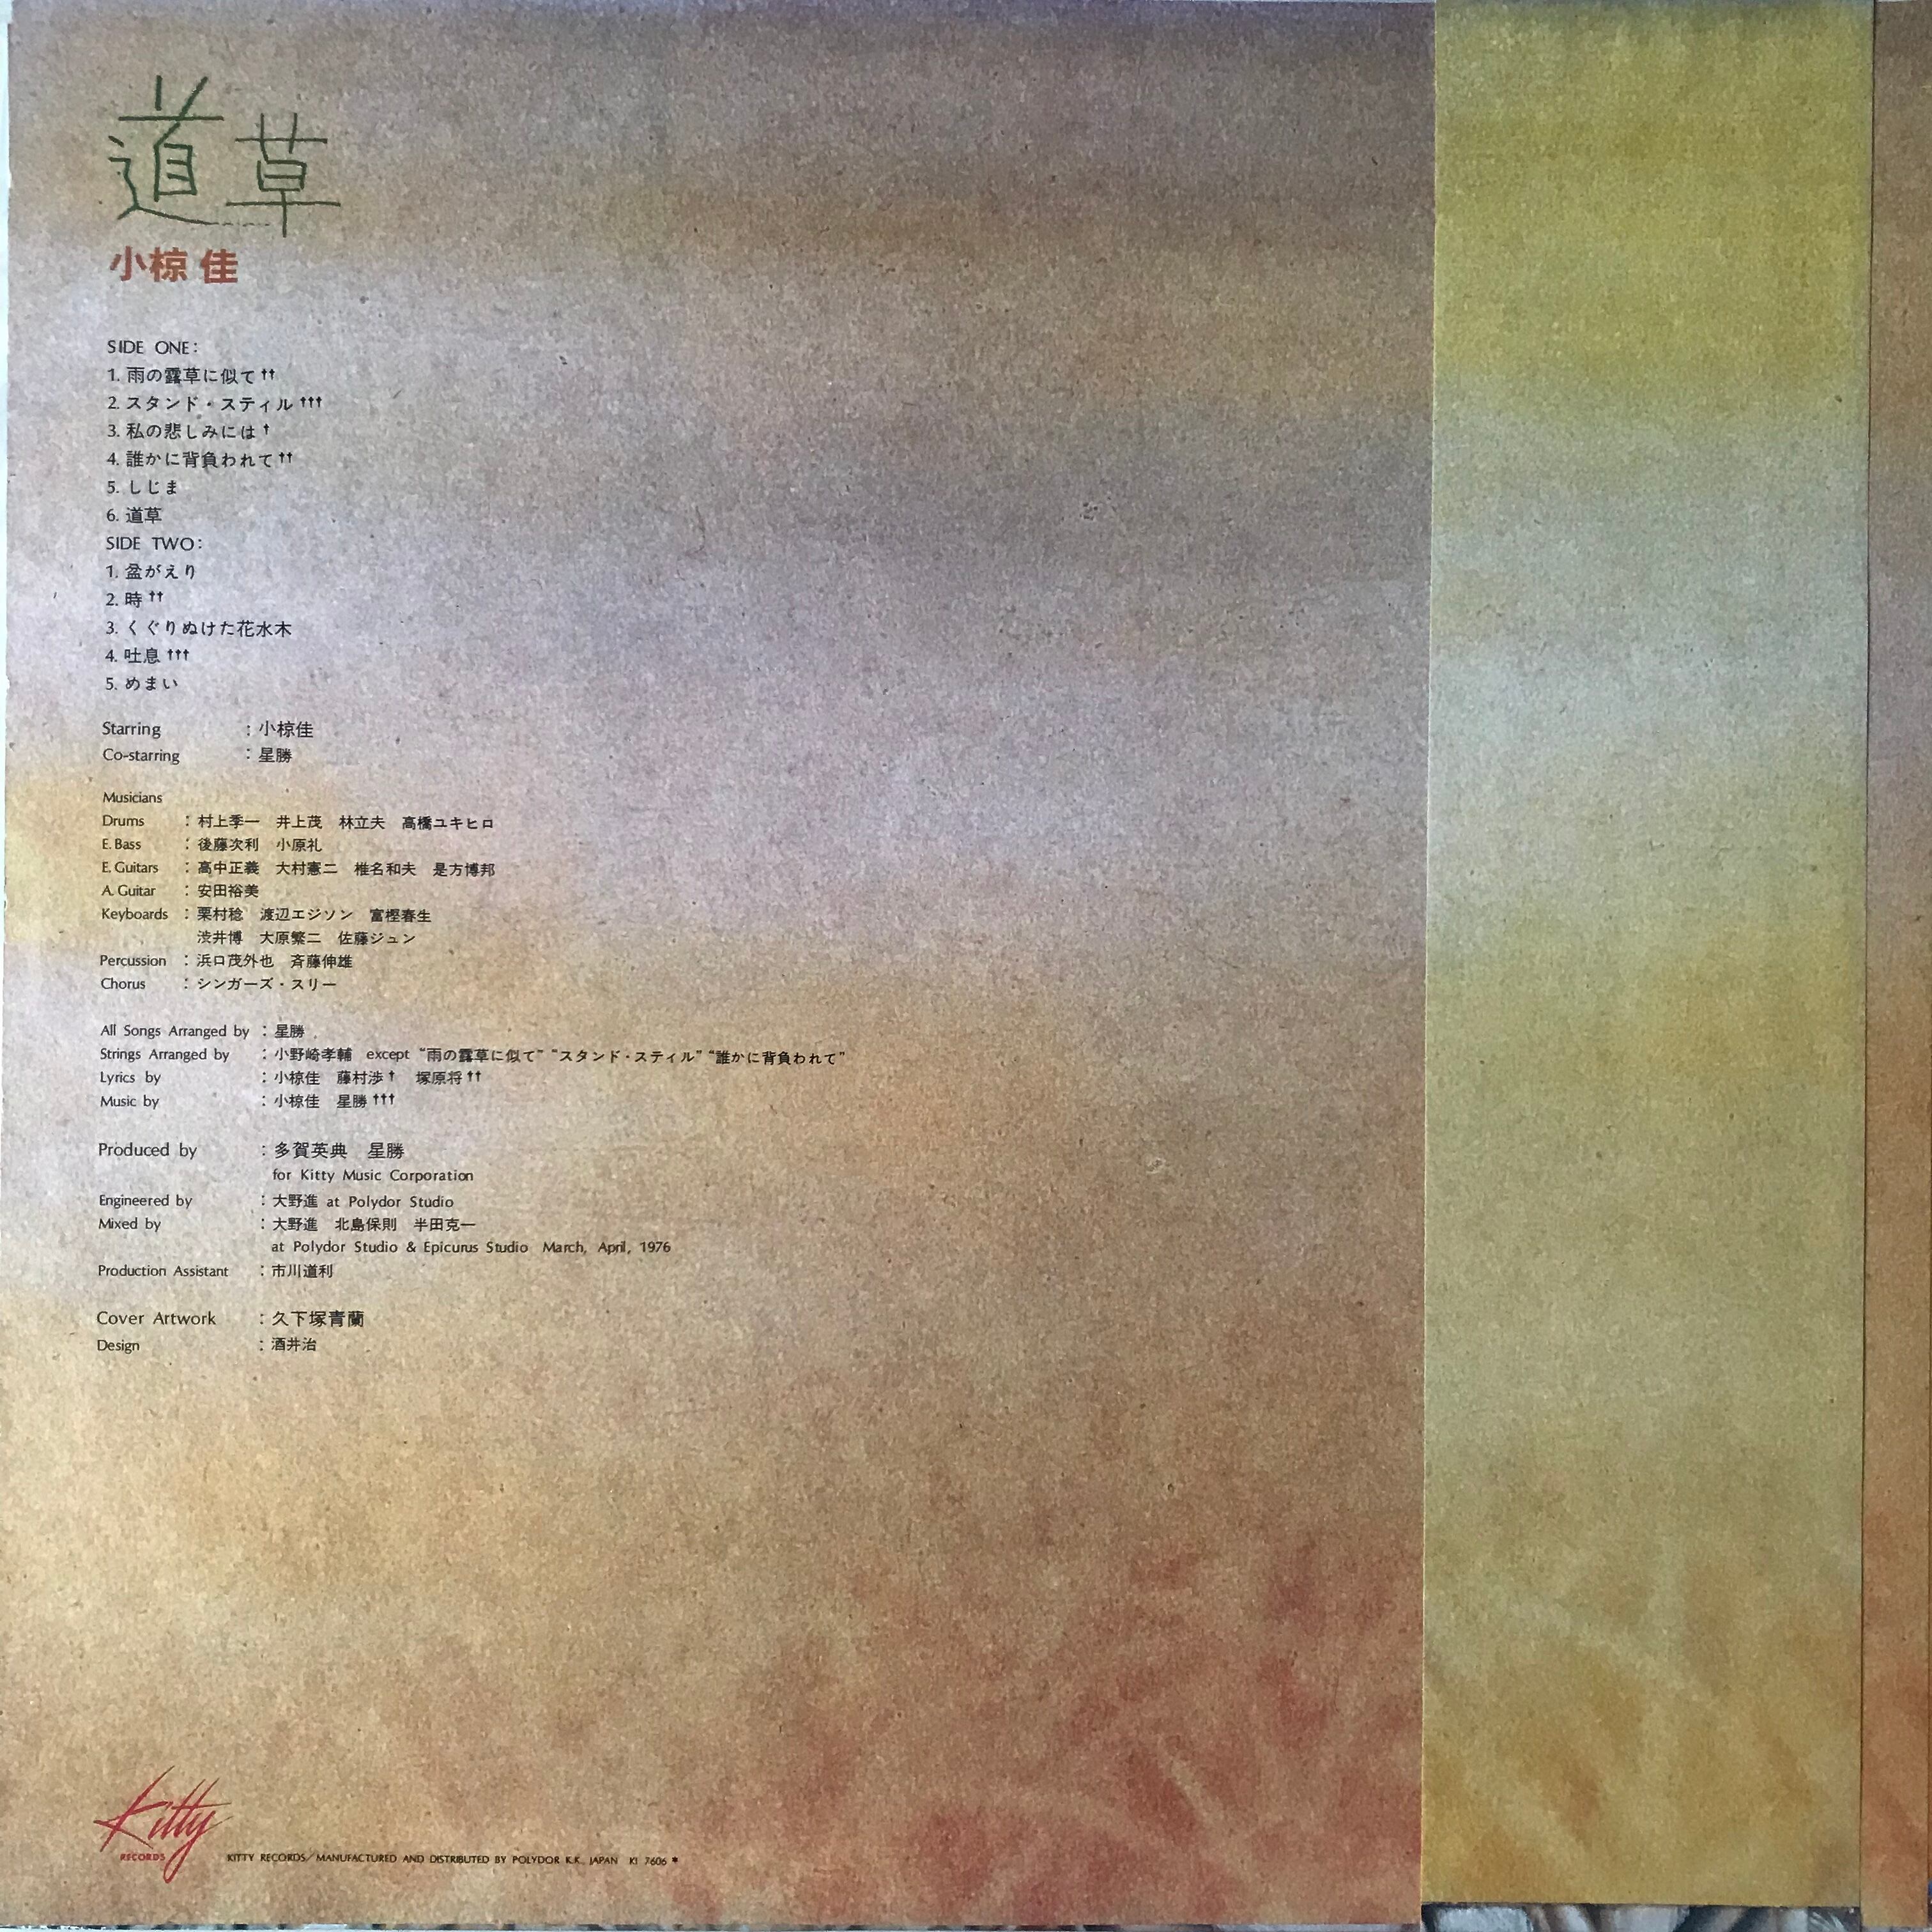 LP]小椋佳 道草 [1976] SHAQ VINYL ーシェイクバイナルー